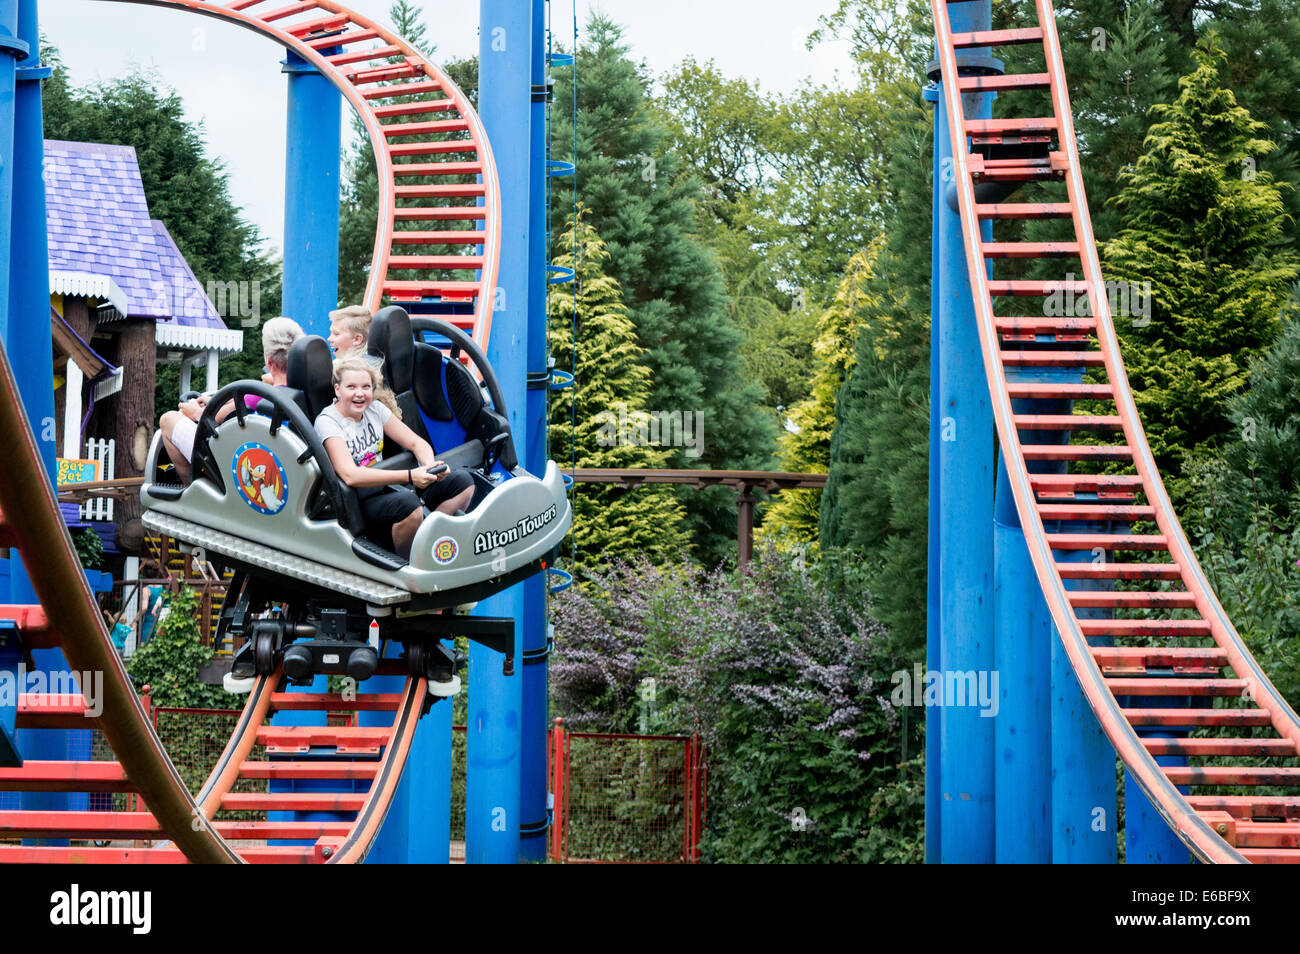 Familt enjoying the Sonic Spinball rollercoaster ride at Alton Towers theme  park Stock Photo - Alamy